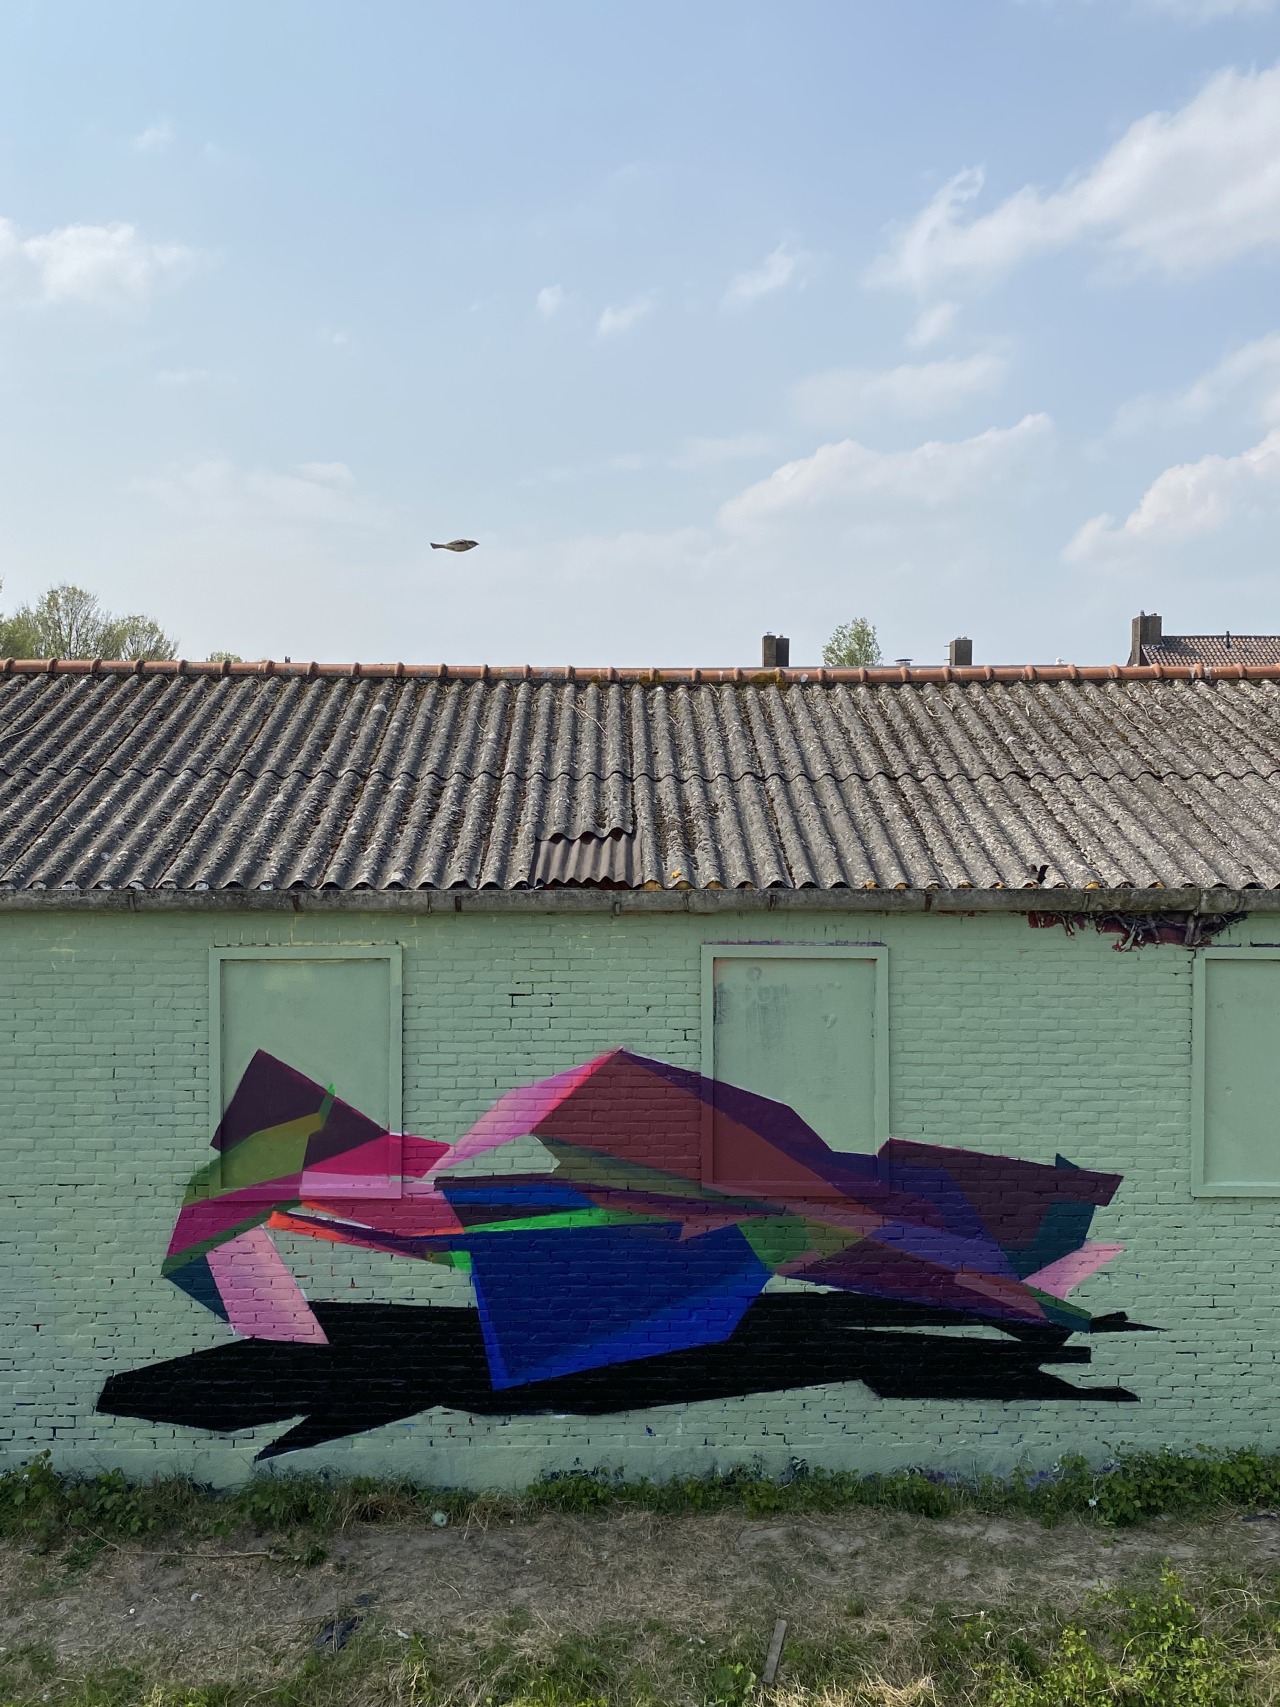 23042022
Vlissingen.
250 cm x 700 cm
Spraypaint on brick wall